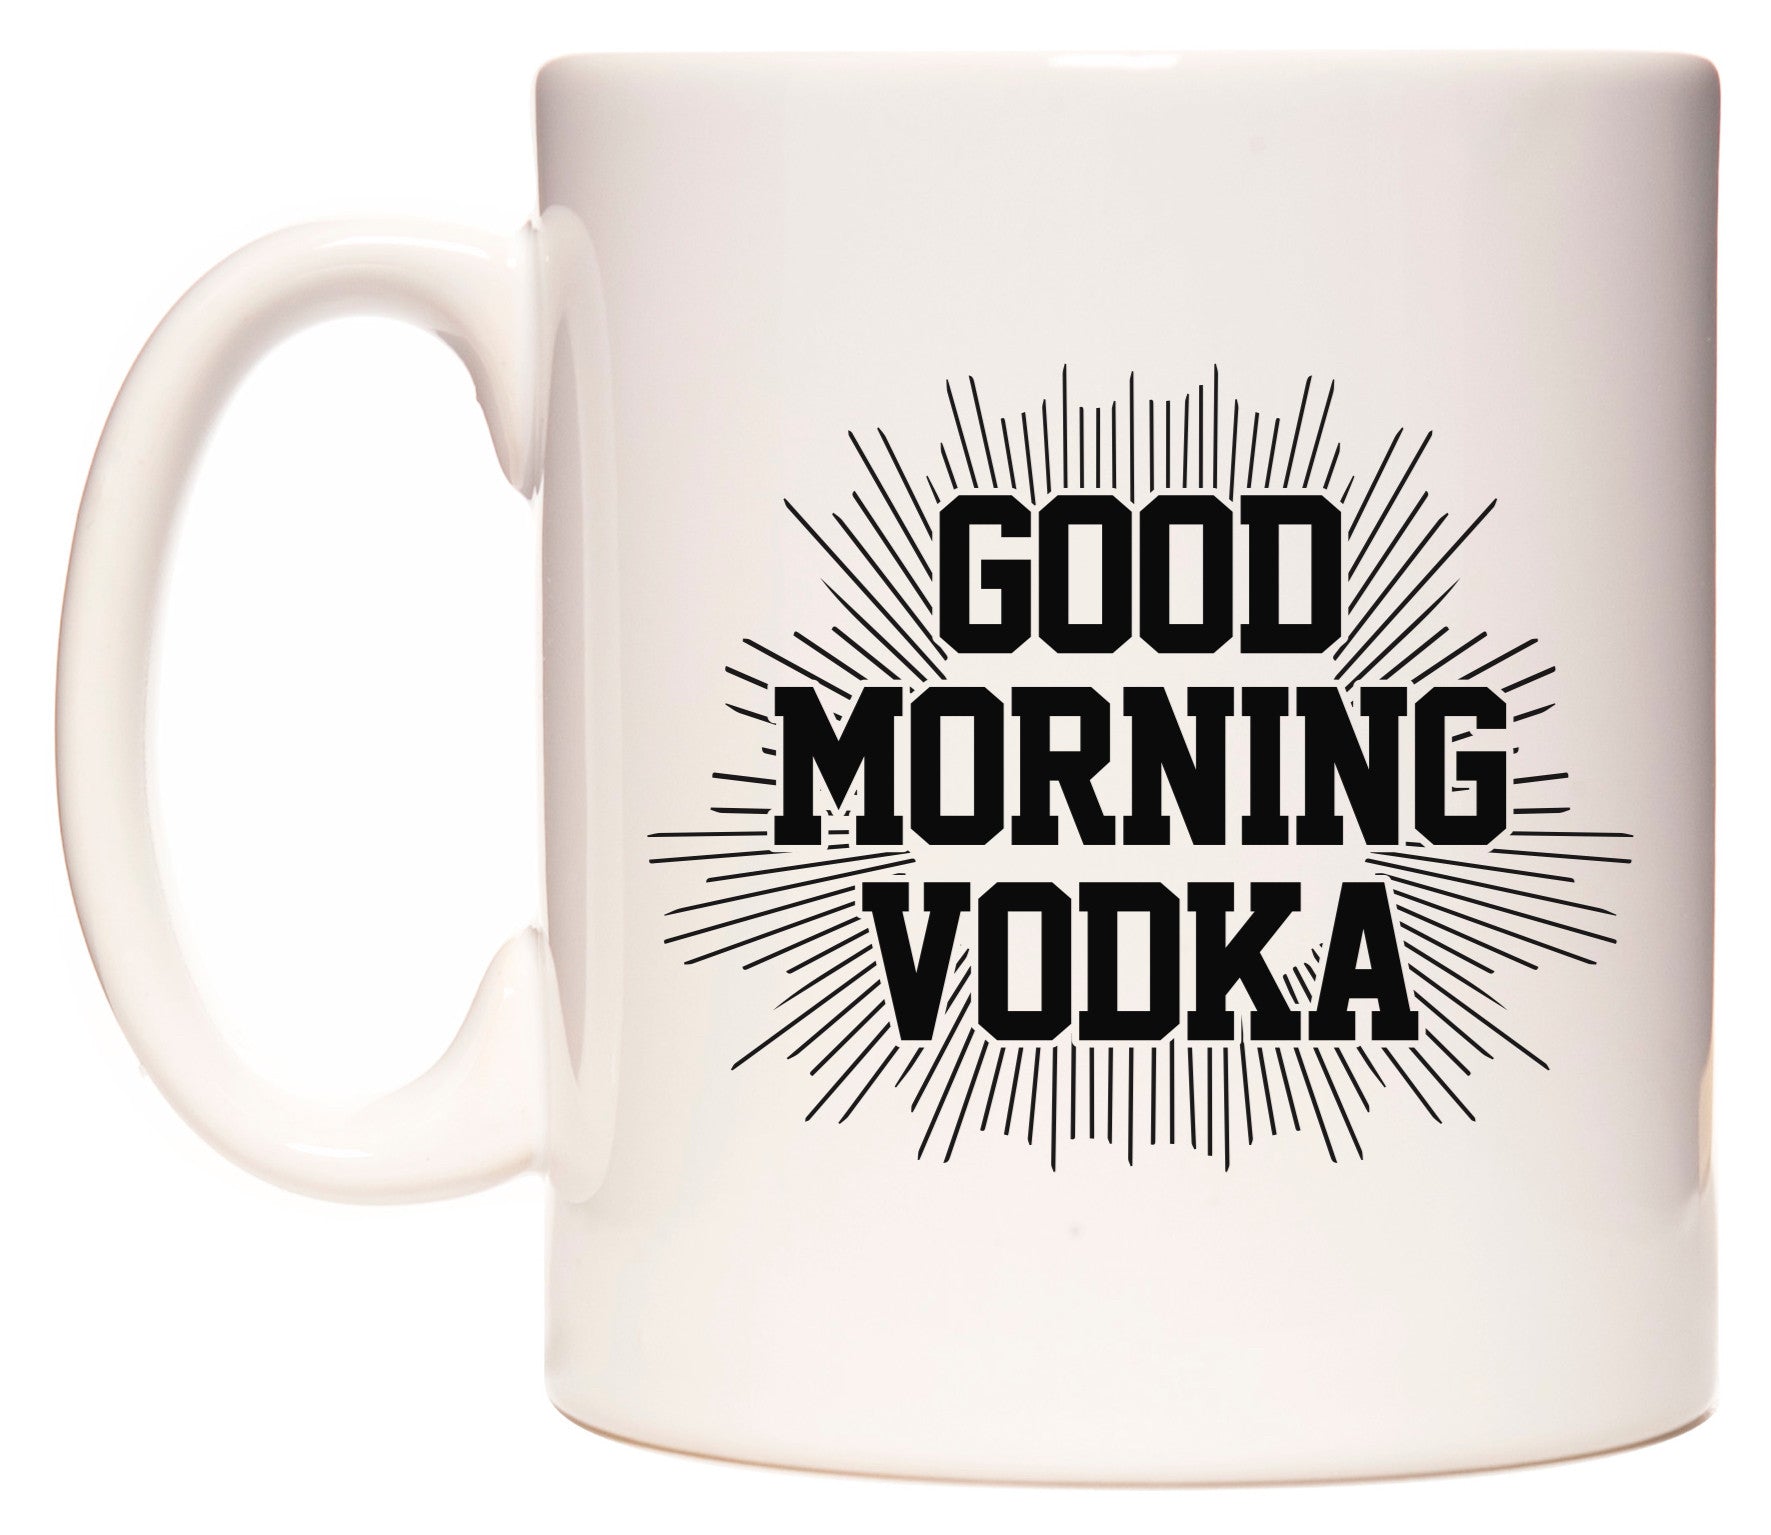 This mug features GOOD MORNING VODKA